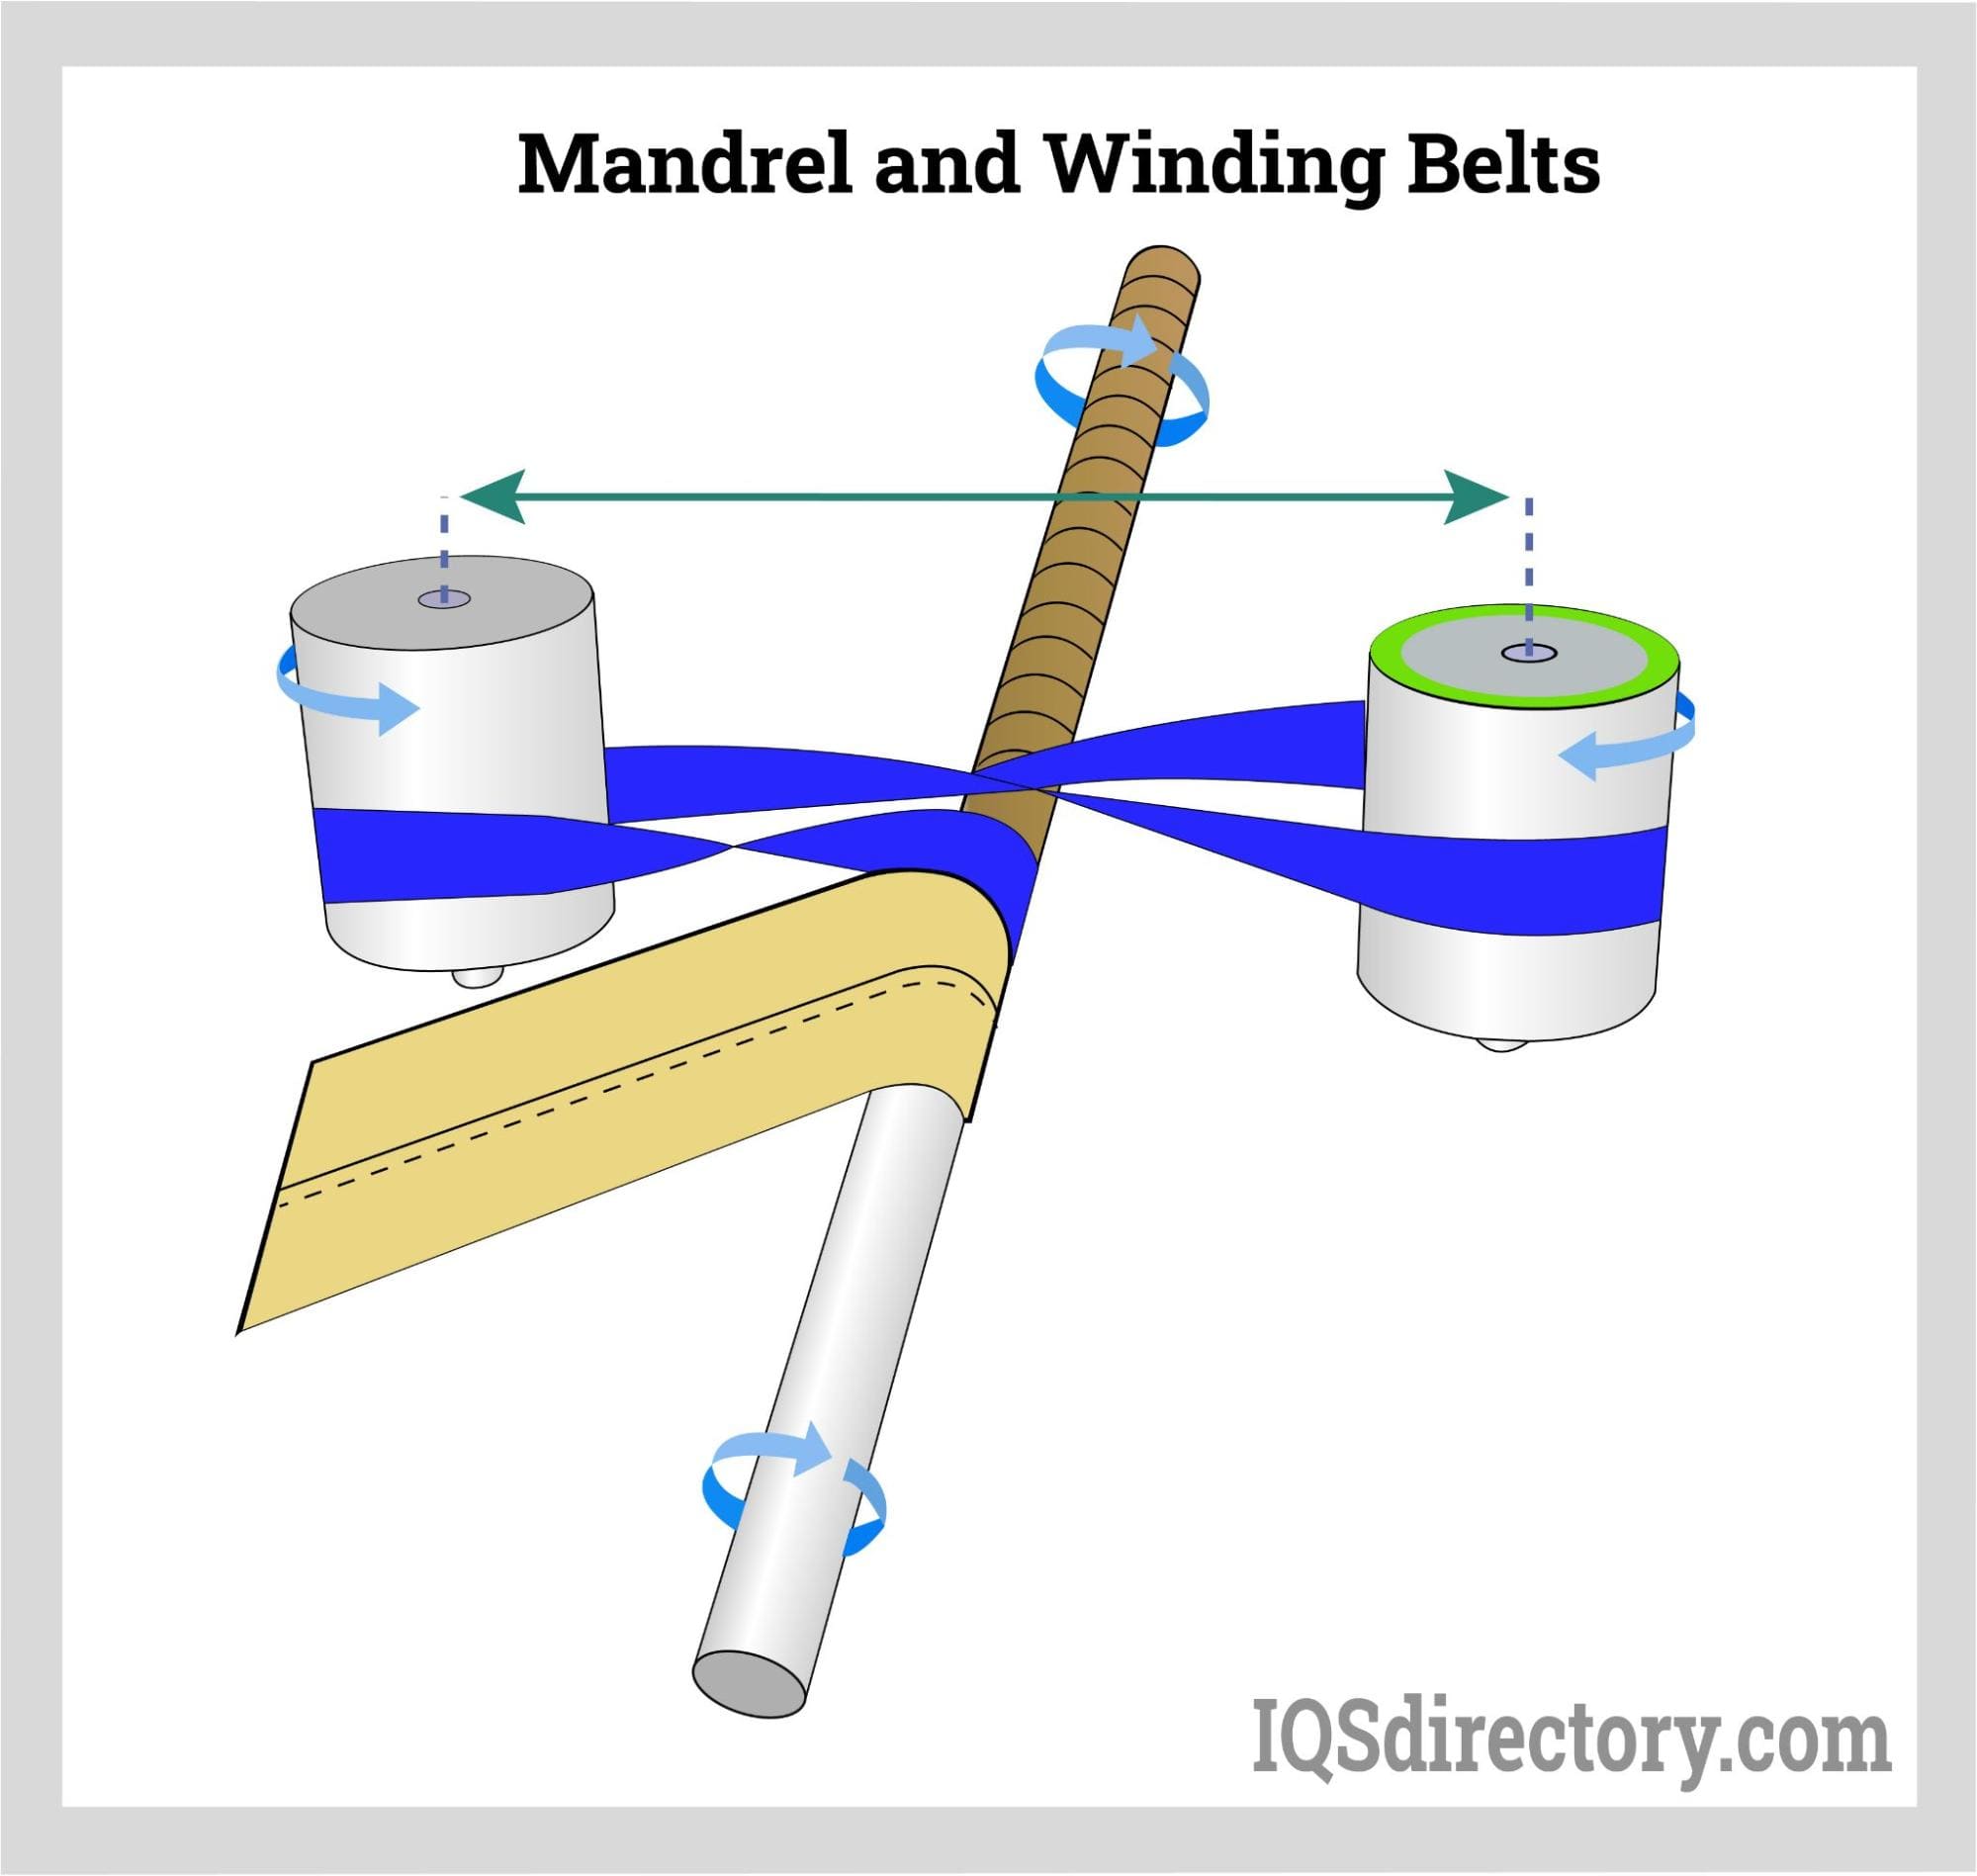 Mandrel and Winding Belts